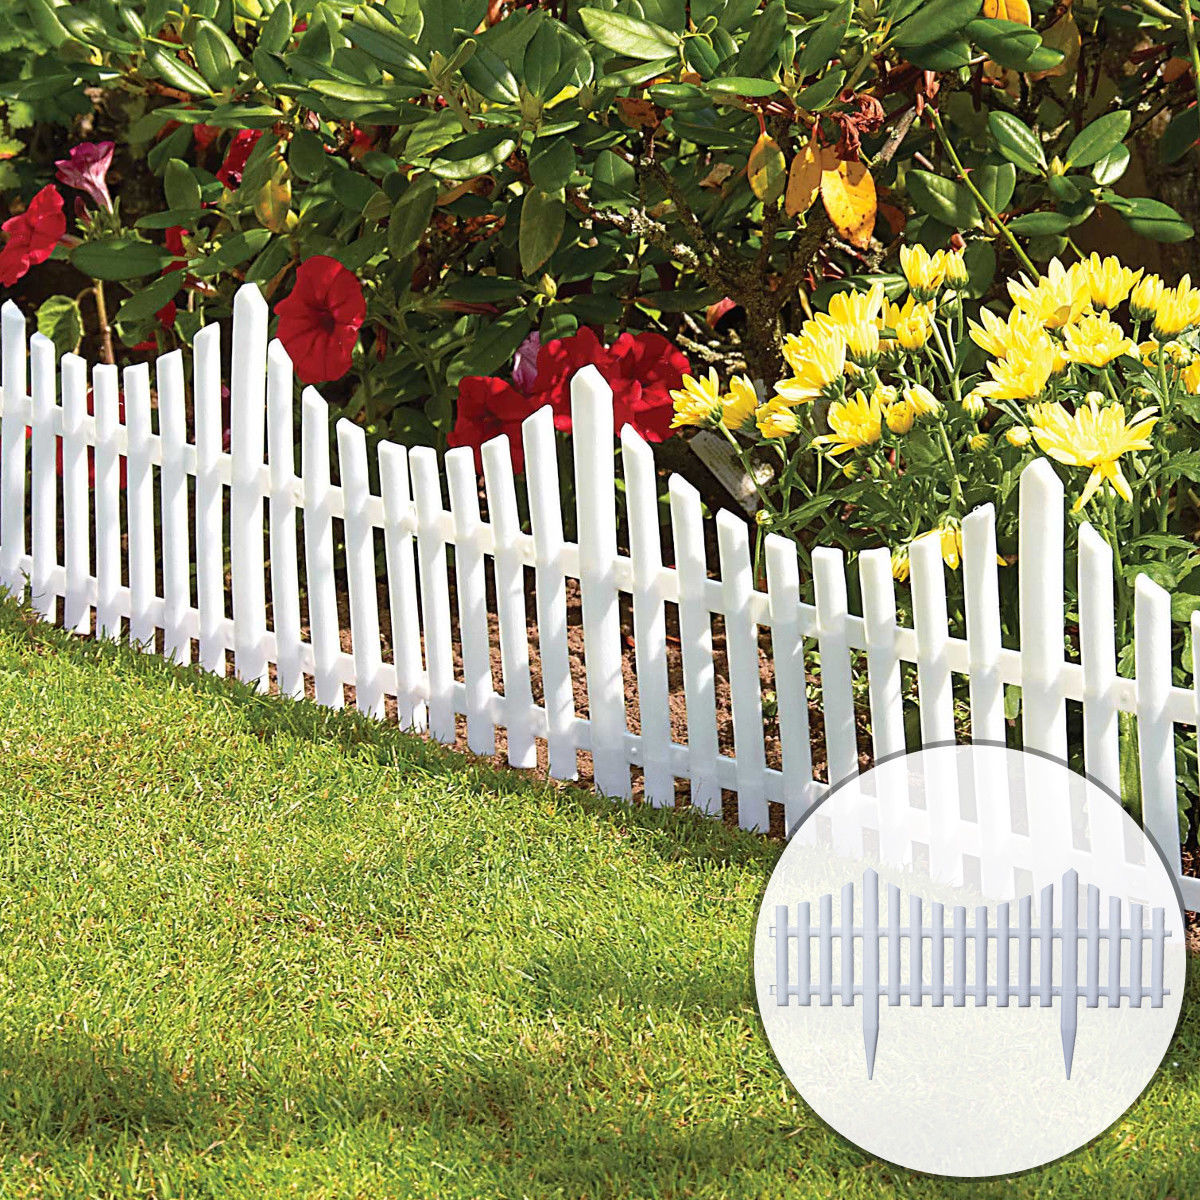 Pack Plastic Garden Border Fencing Fence Pannels Outdoor Landscape